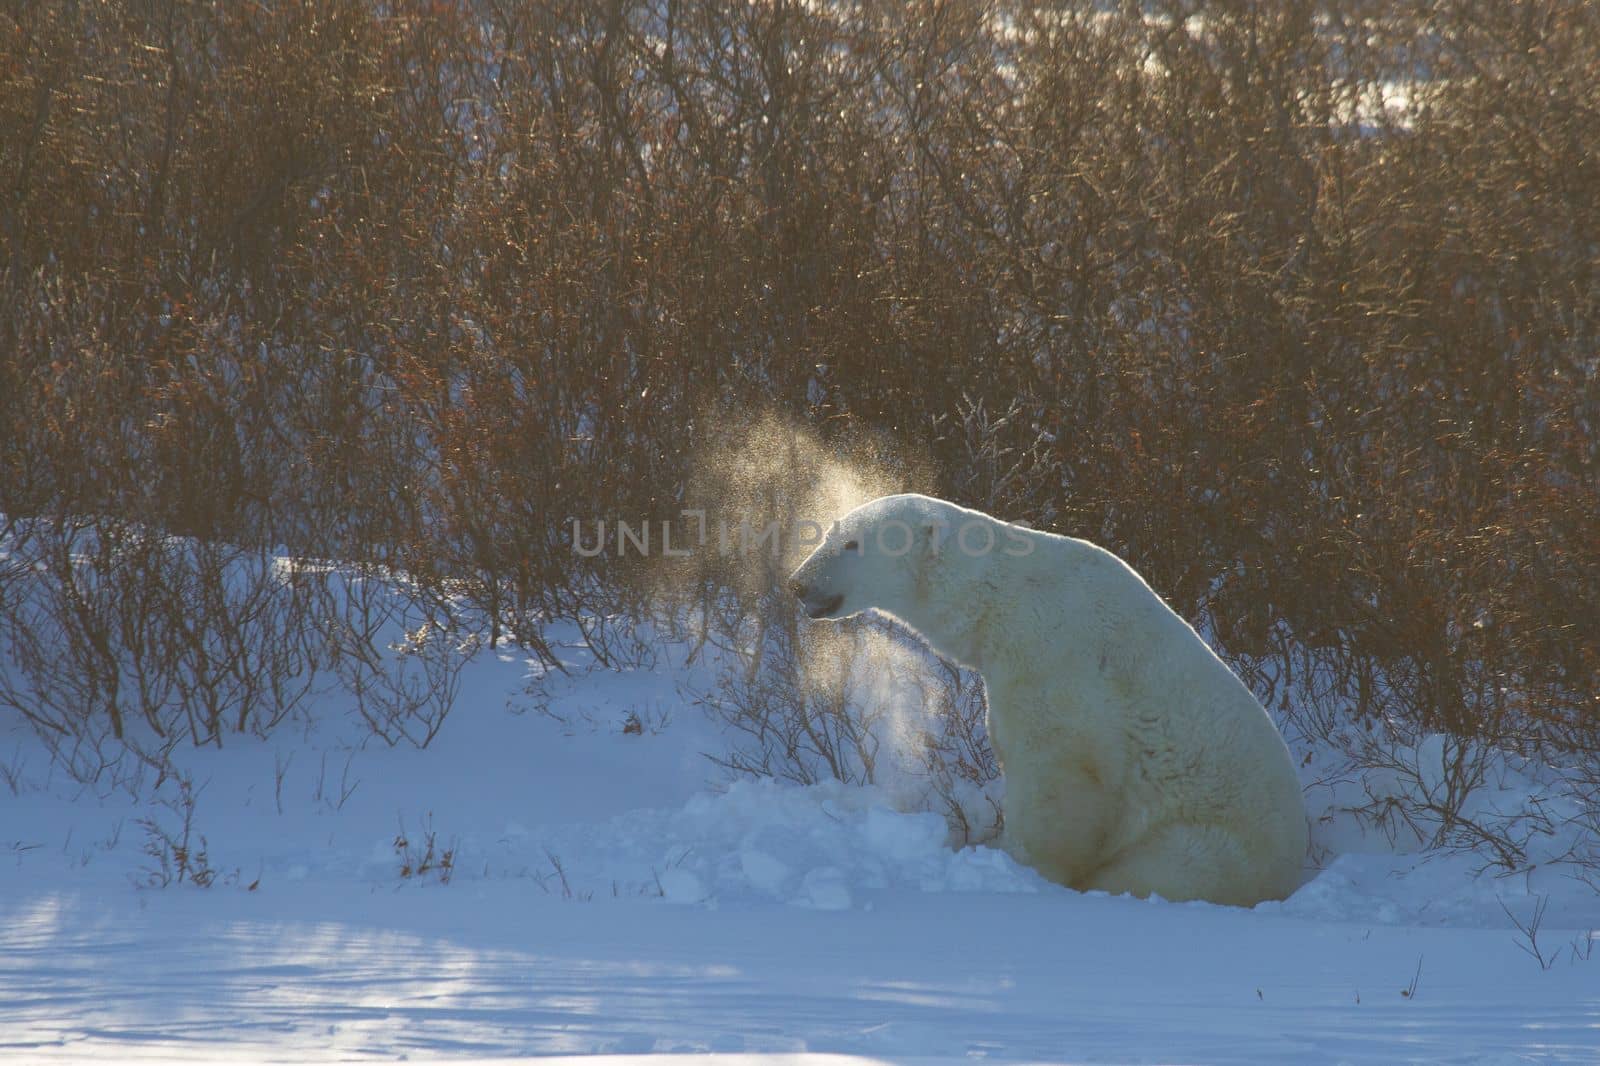 A polar bear or ursus maritumus shaking snow off, near Churchill, Manitoba Canada by Granchinho